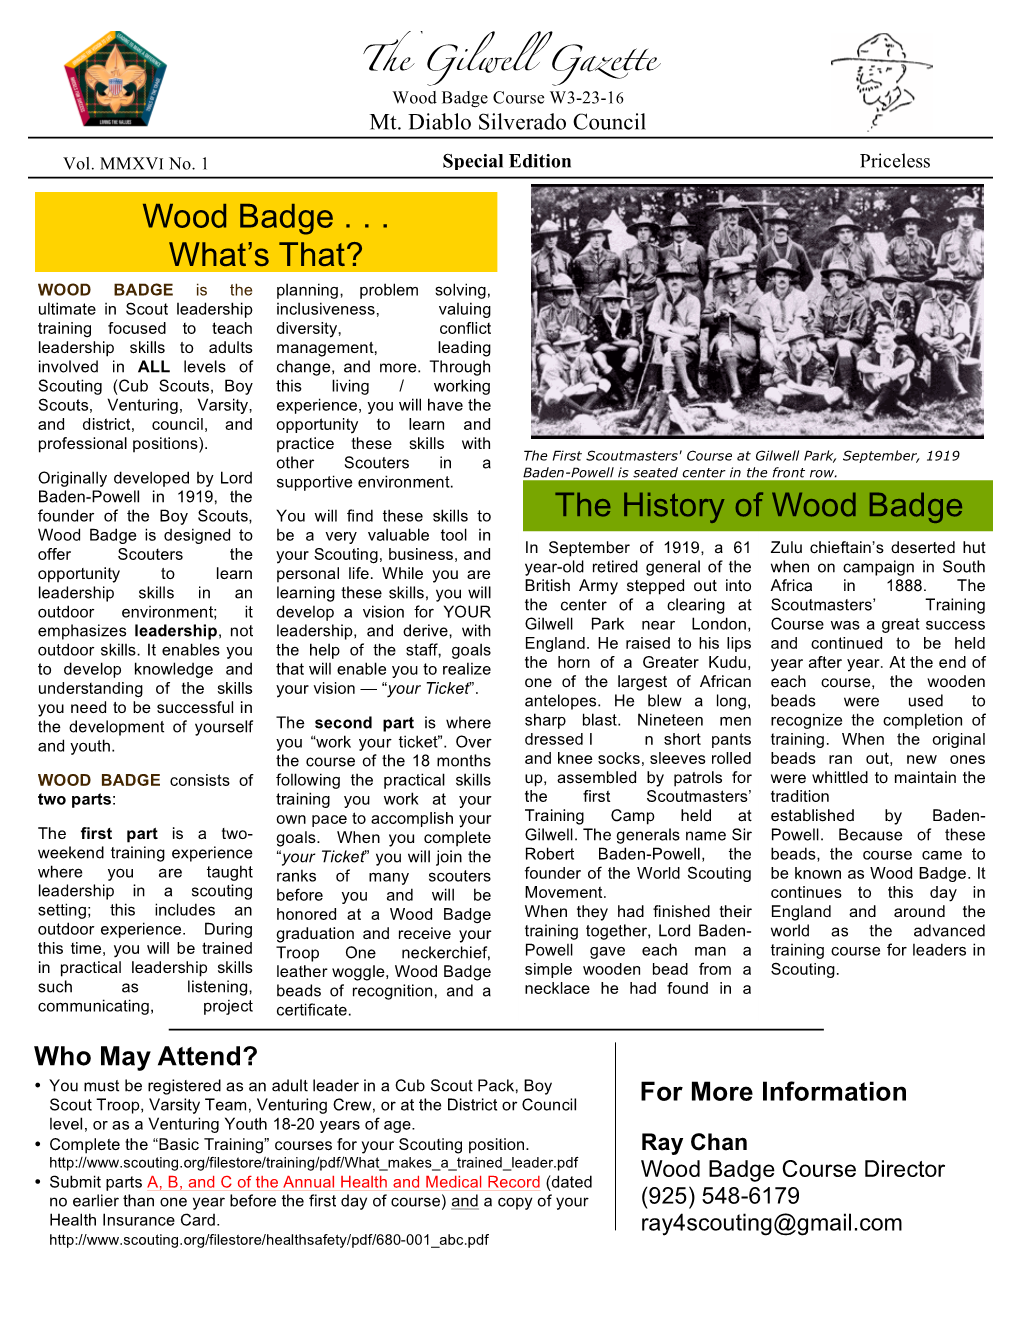 Wood-Badge-2016-Gazette.Pdf